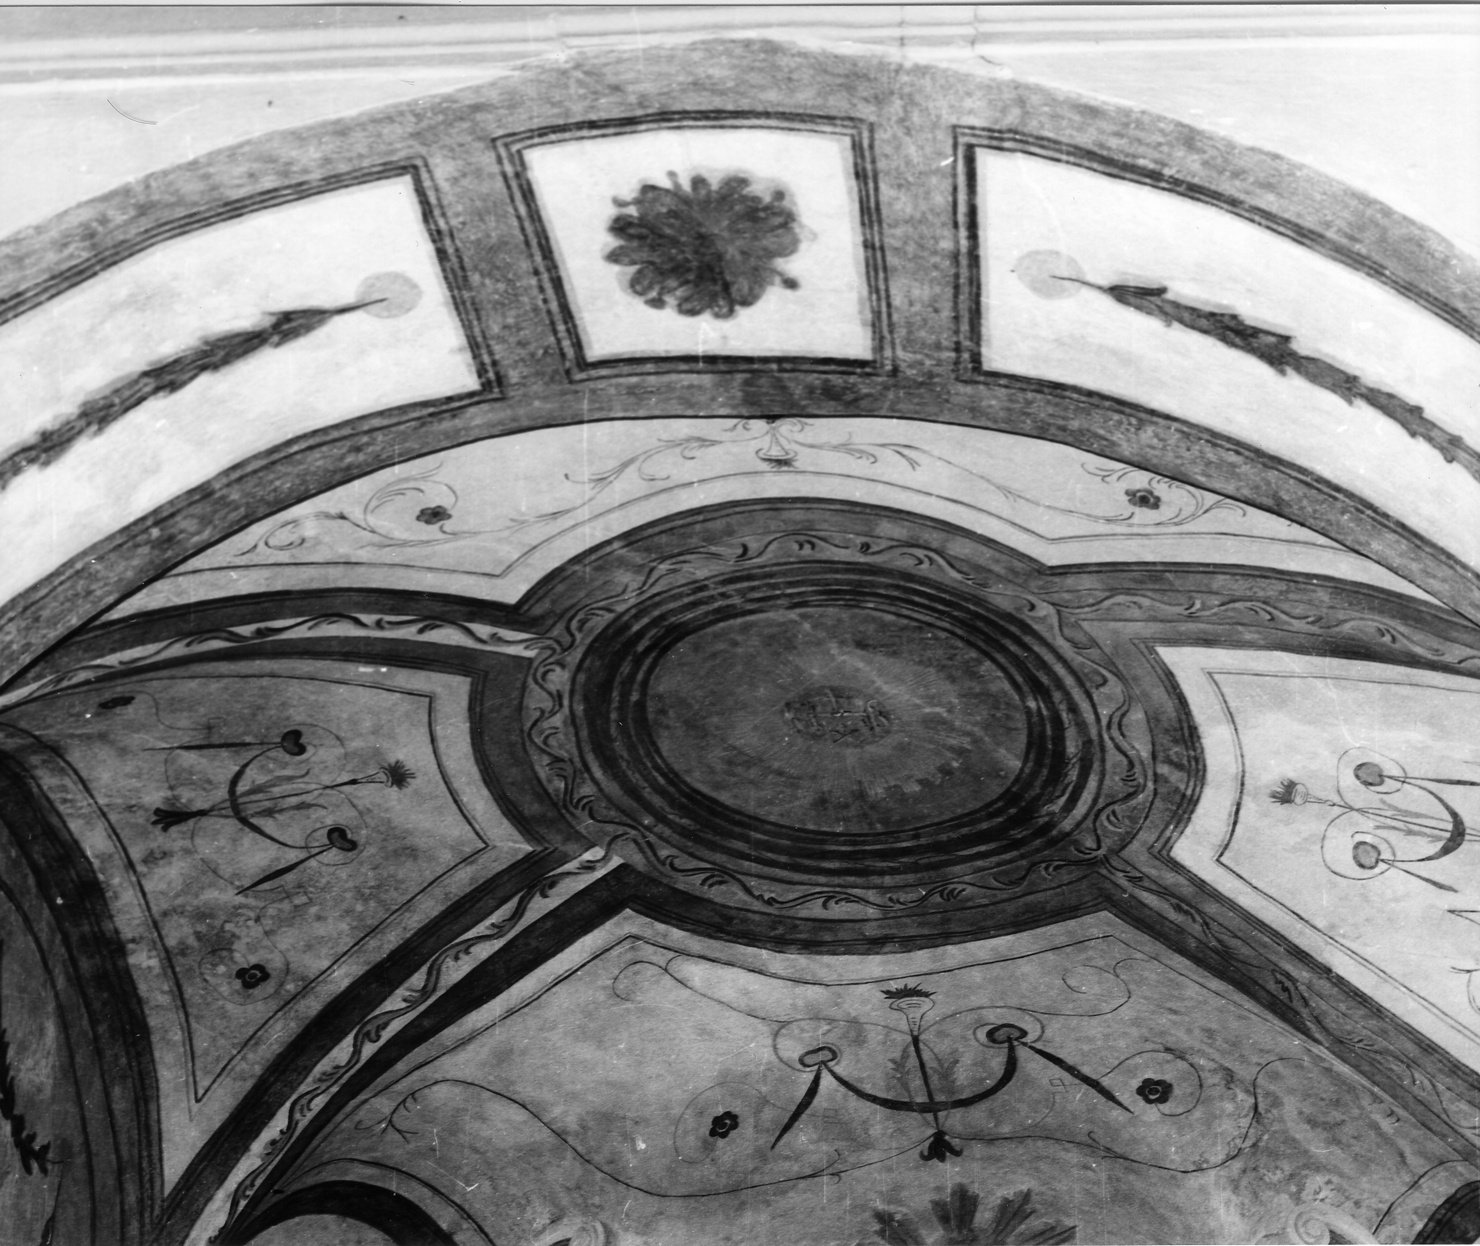 motivi decorativi (dipinto murale) - ambito ligure (inizio sec. XX)